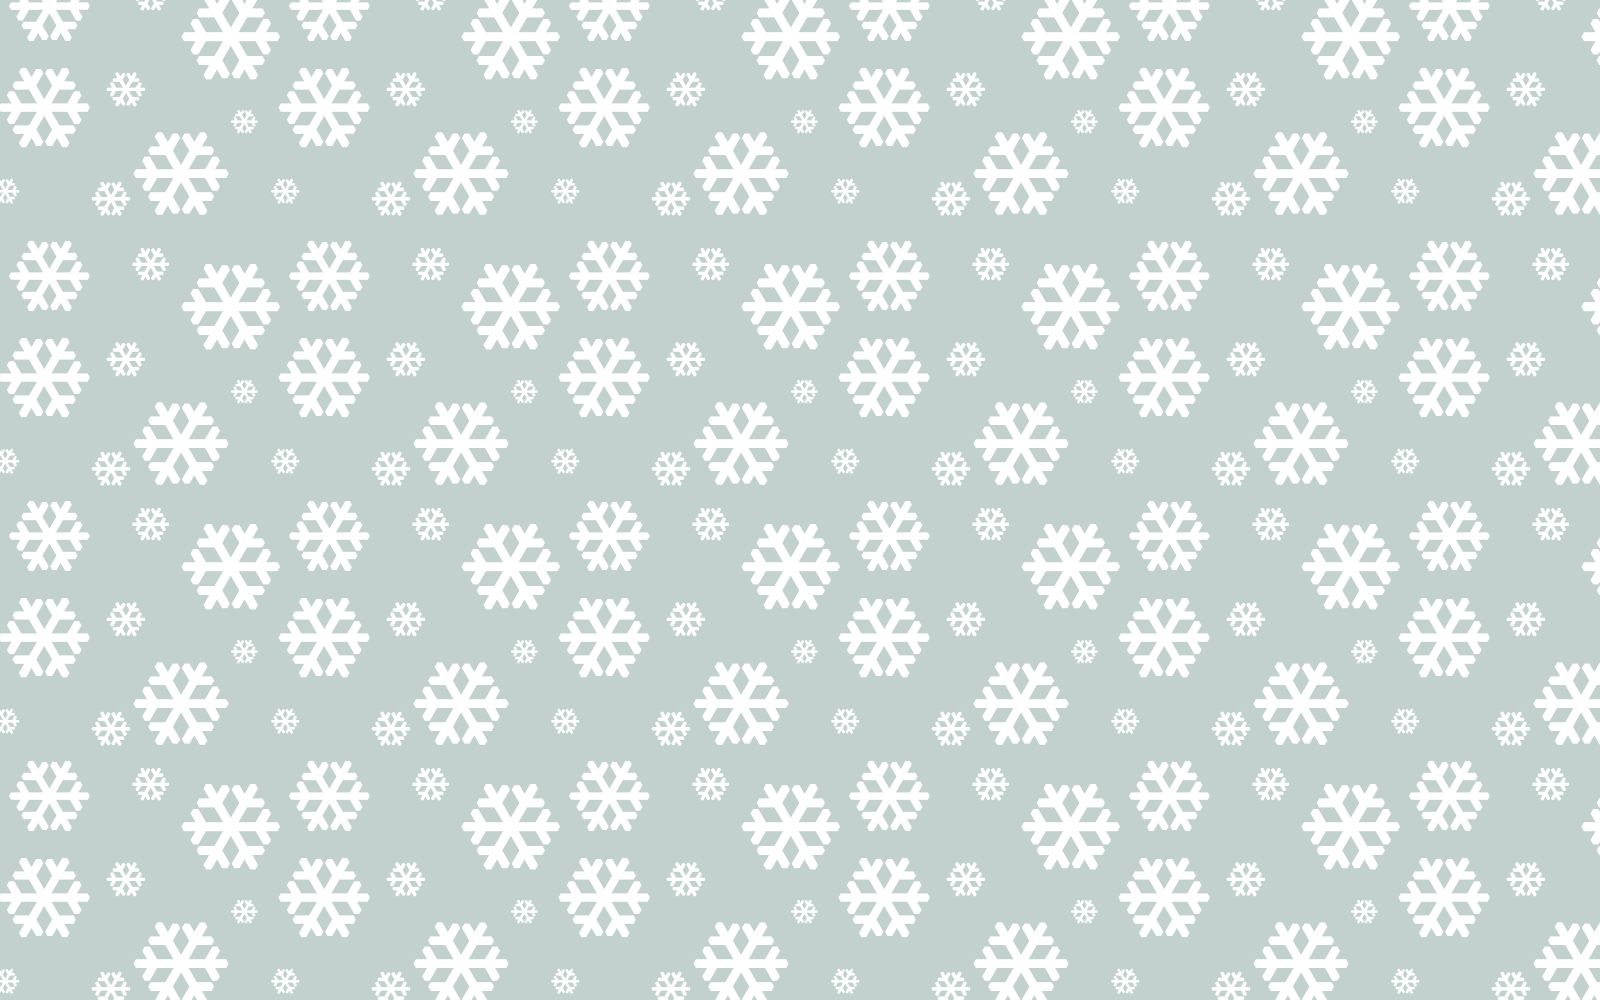 Free Snowflake Background 18297 1600x1000 px. Christmas desktop wallpaper, Tumblr christmas background, Cute christmas background